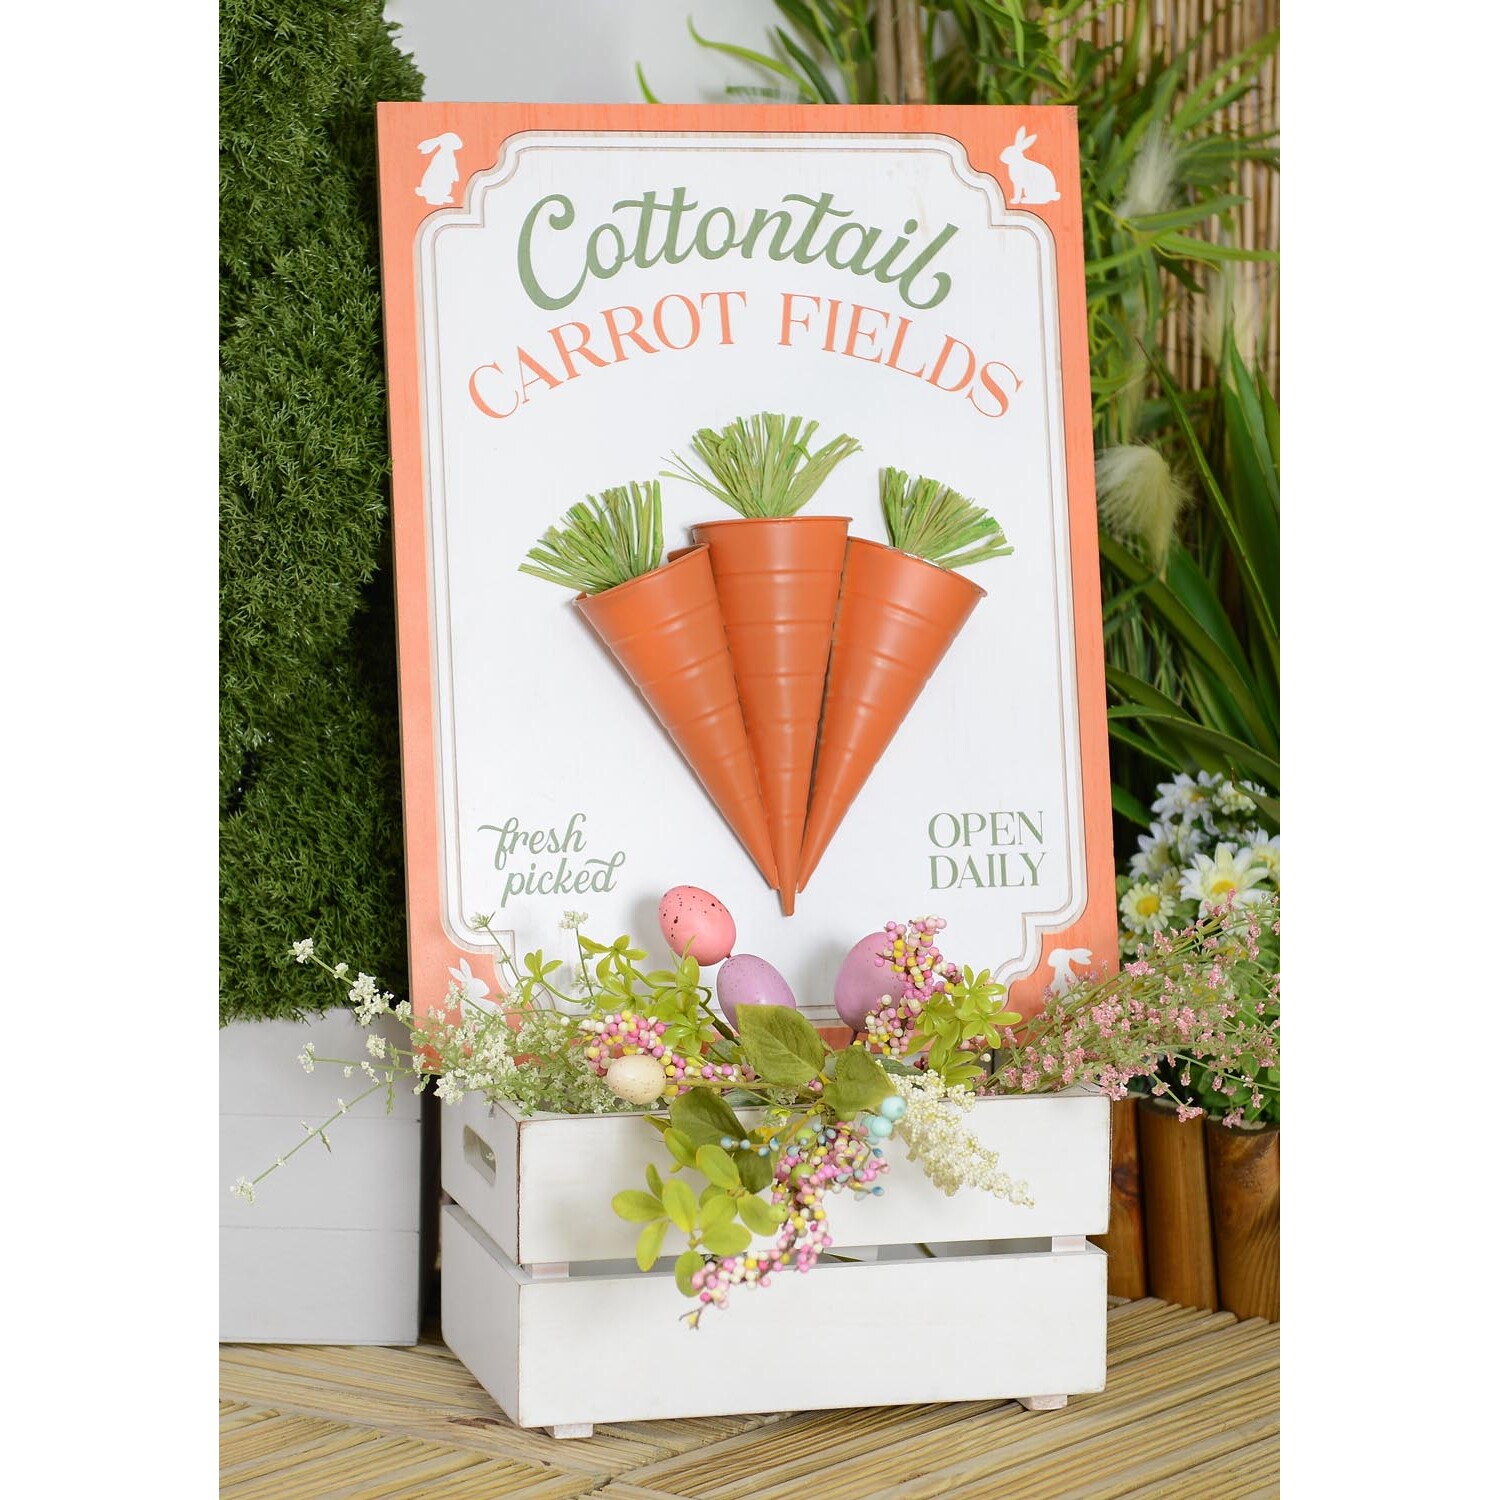 Cottontail Carrot Fields Plaque - Orange Image 1